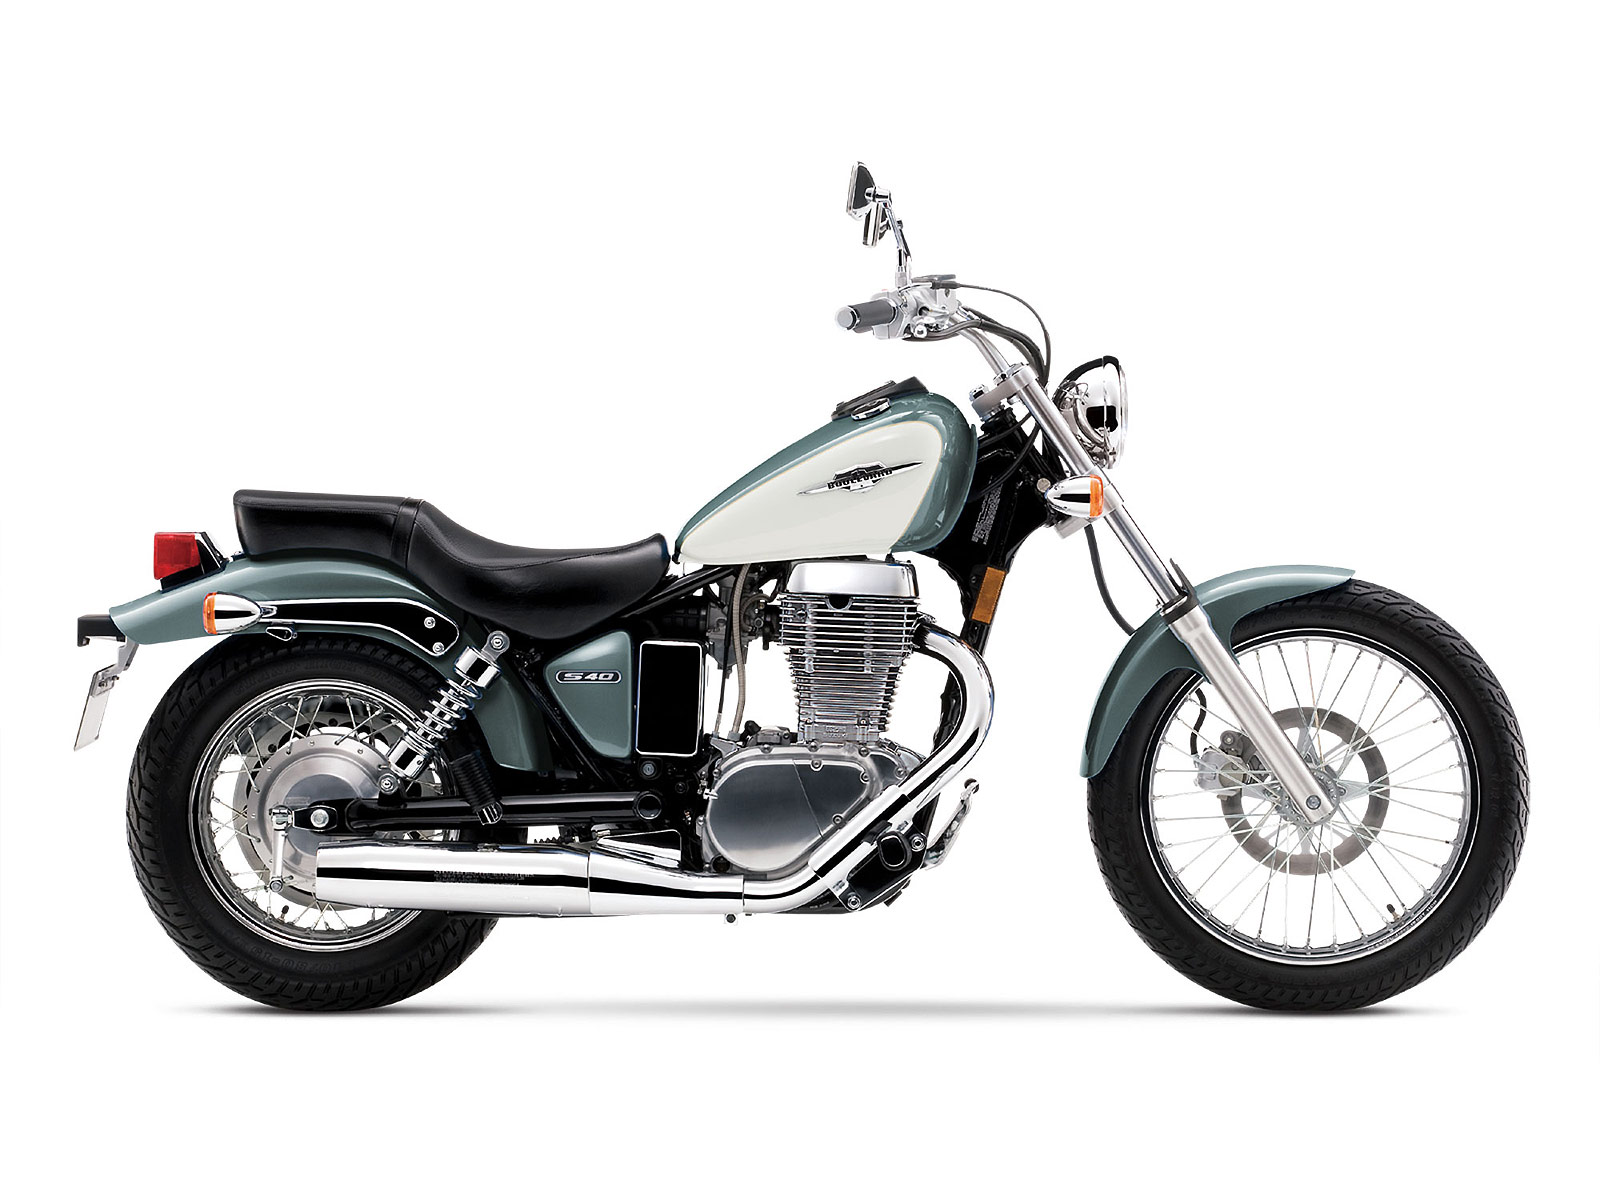 2013 Suzuki Boulevard S40 Motorcycle photos, specifications